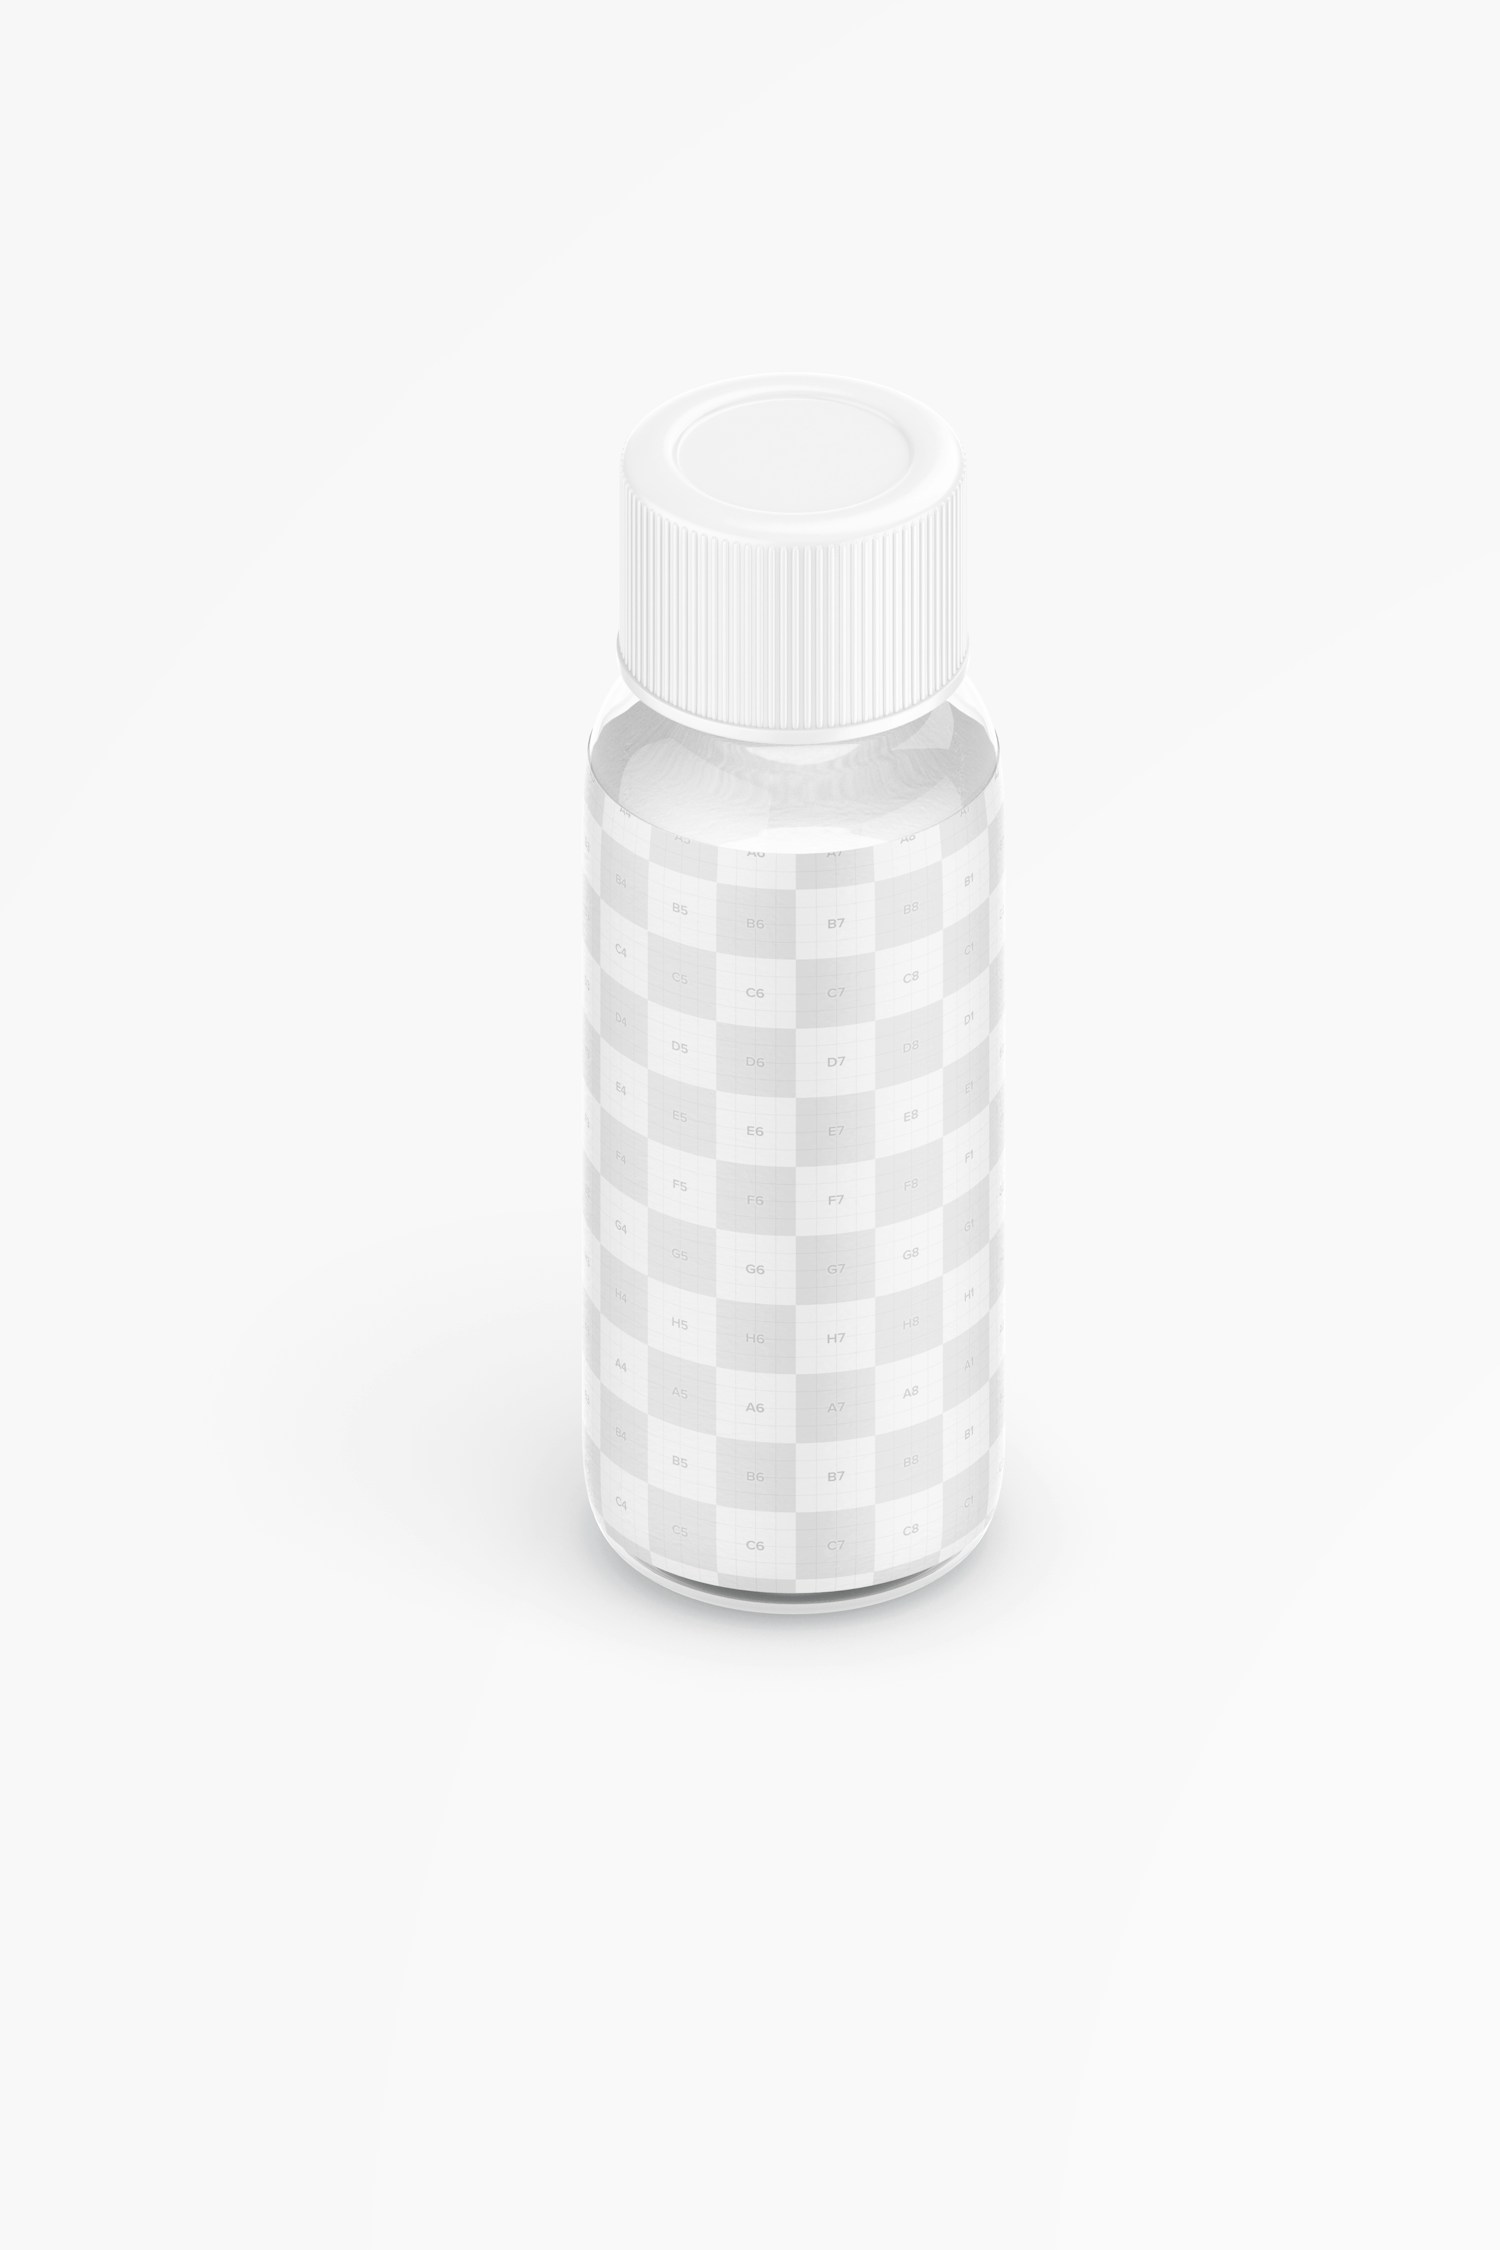 1 oz PET Cosmo Round Bottle Mockup, Isometric View